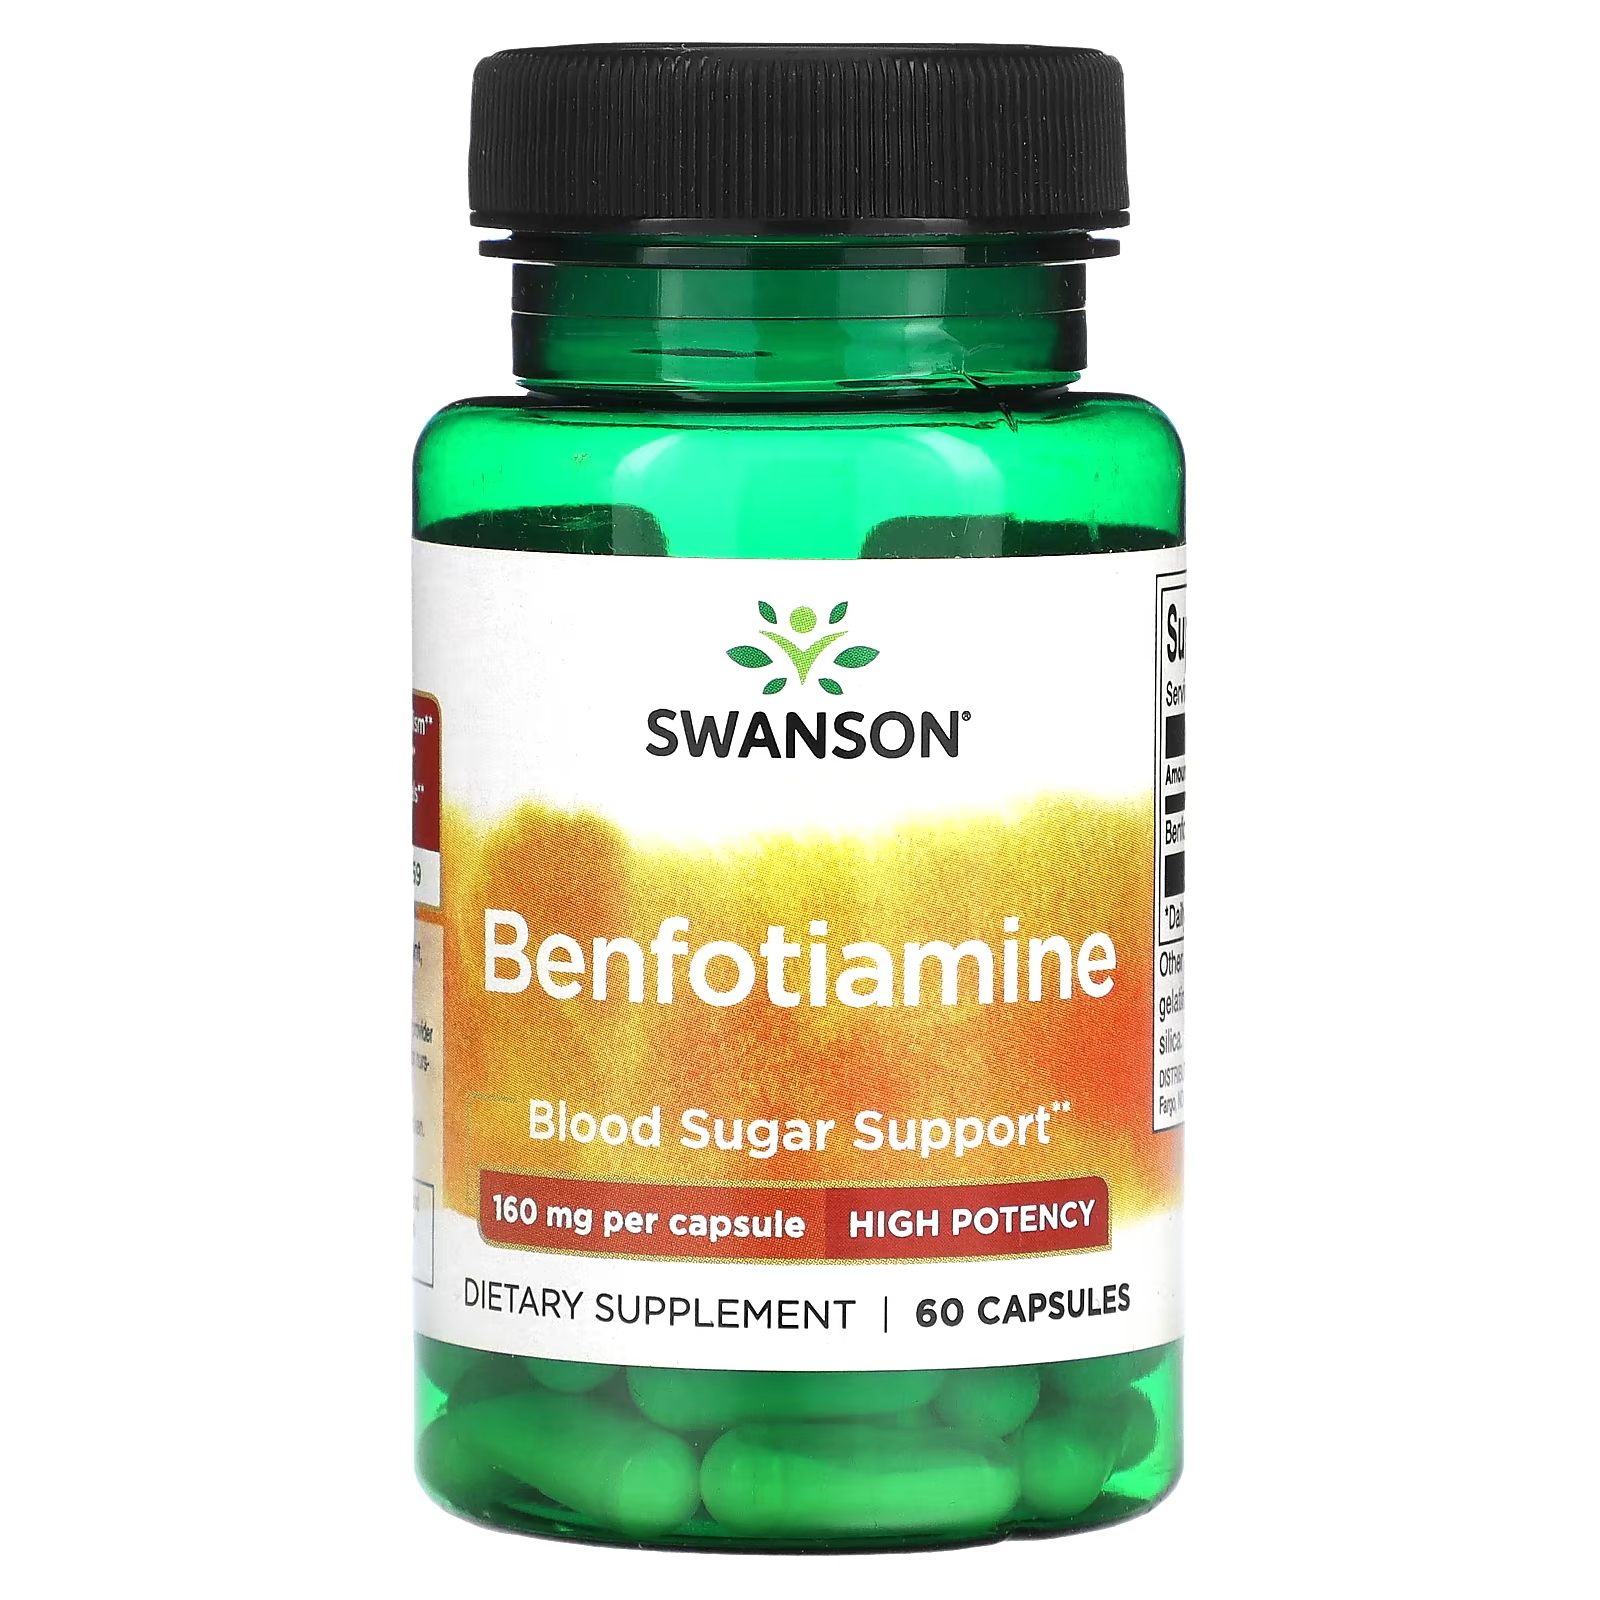 цена Бенфотиамин высокой эффективности Swanson 160 мг, 60 капсул